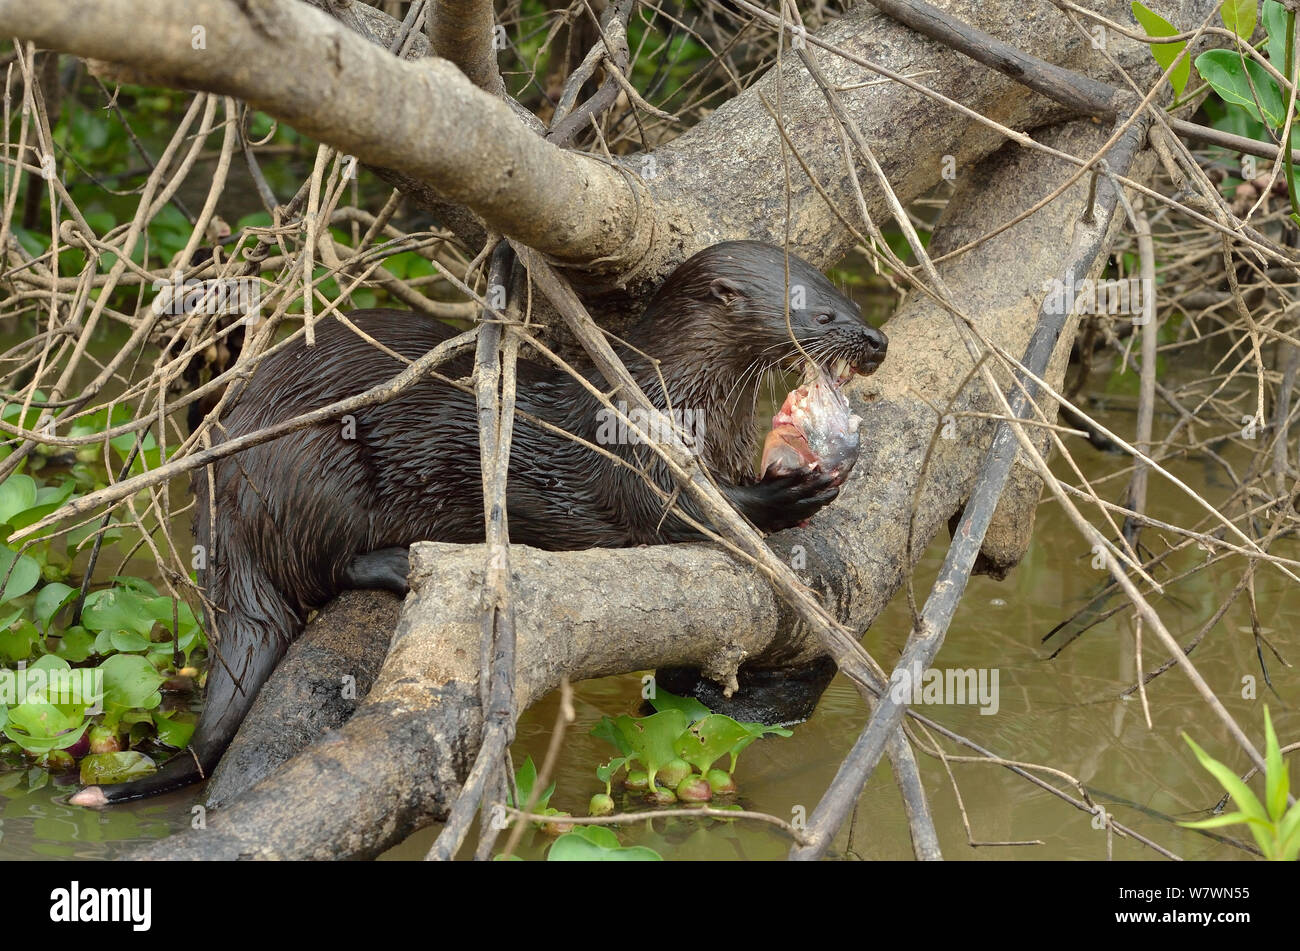 Neotropical Lontra di fiume (Lontra longicaudis) mangiando un pesce, Pantanal, Mato Grosso Membro, Brasile occidentale. Foto Stock